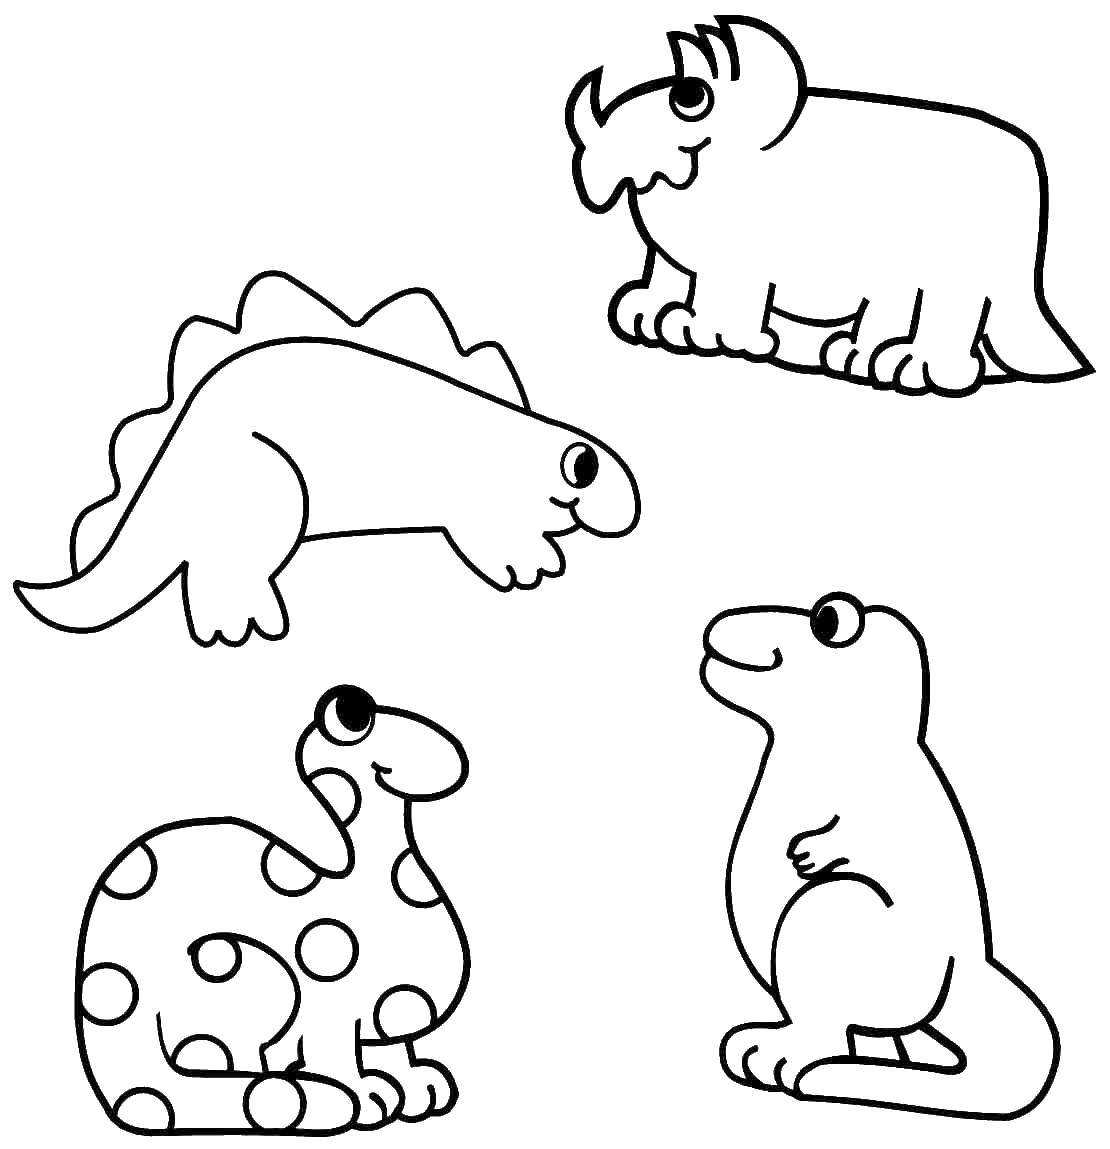 Раскраски формы животных